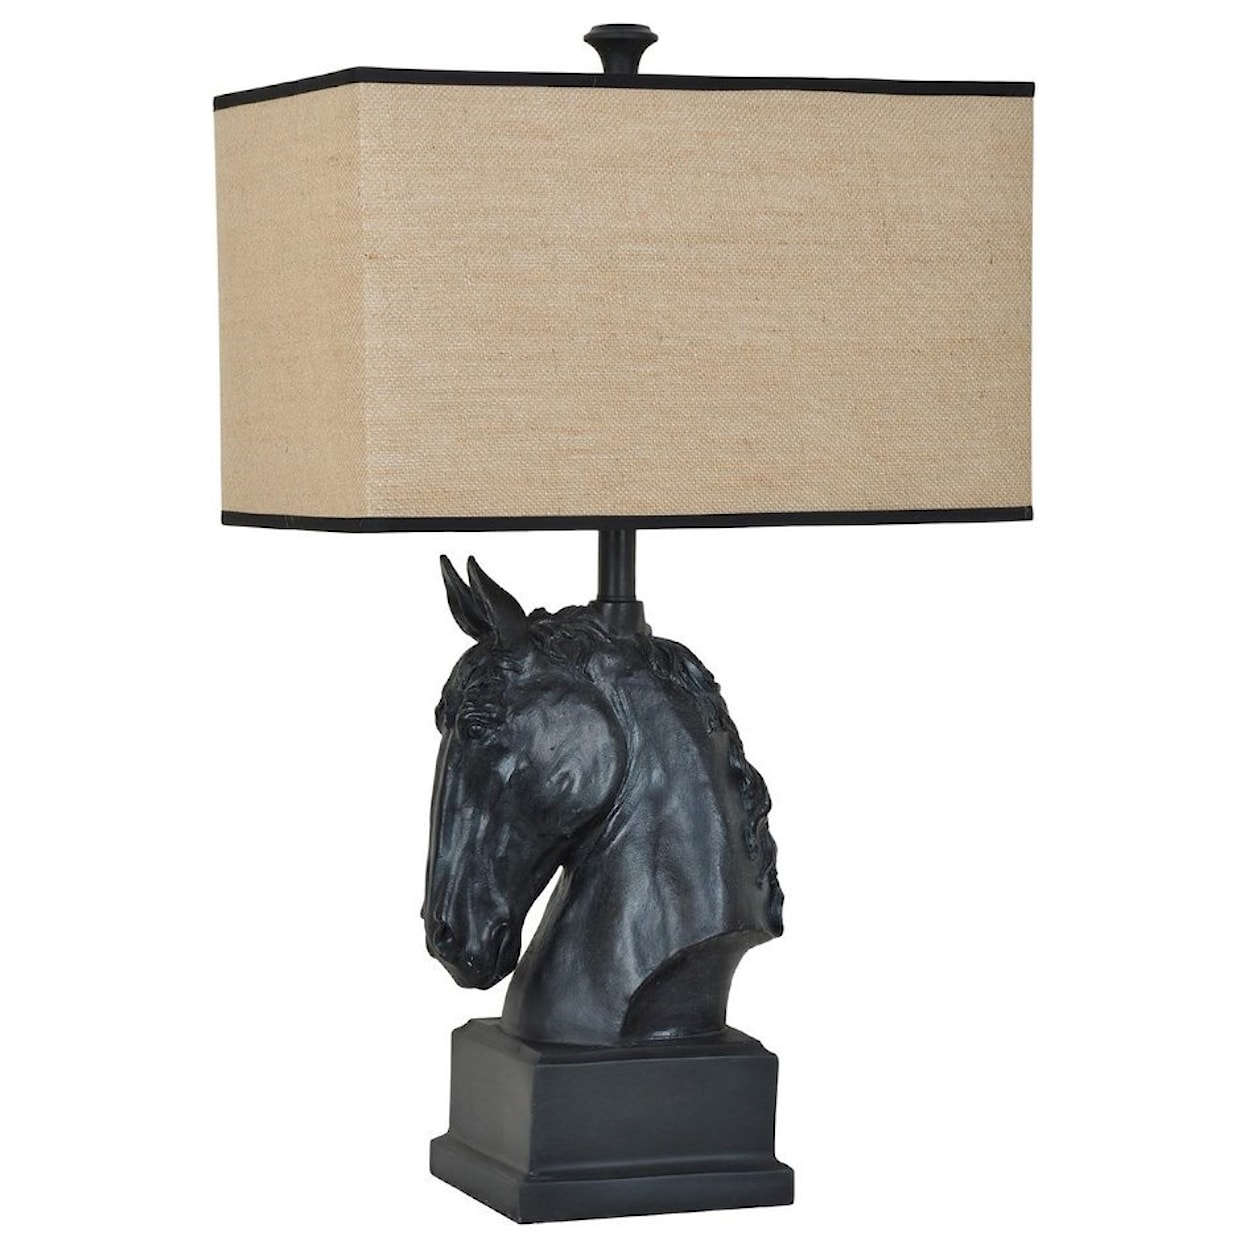 Crestview Collection Lighting Stallion Table Lamp